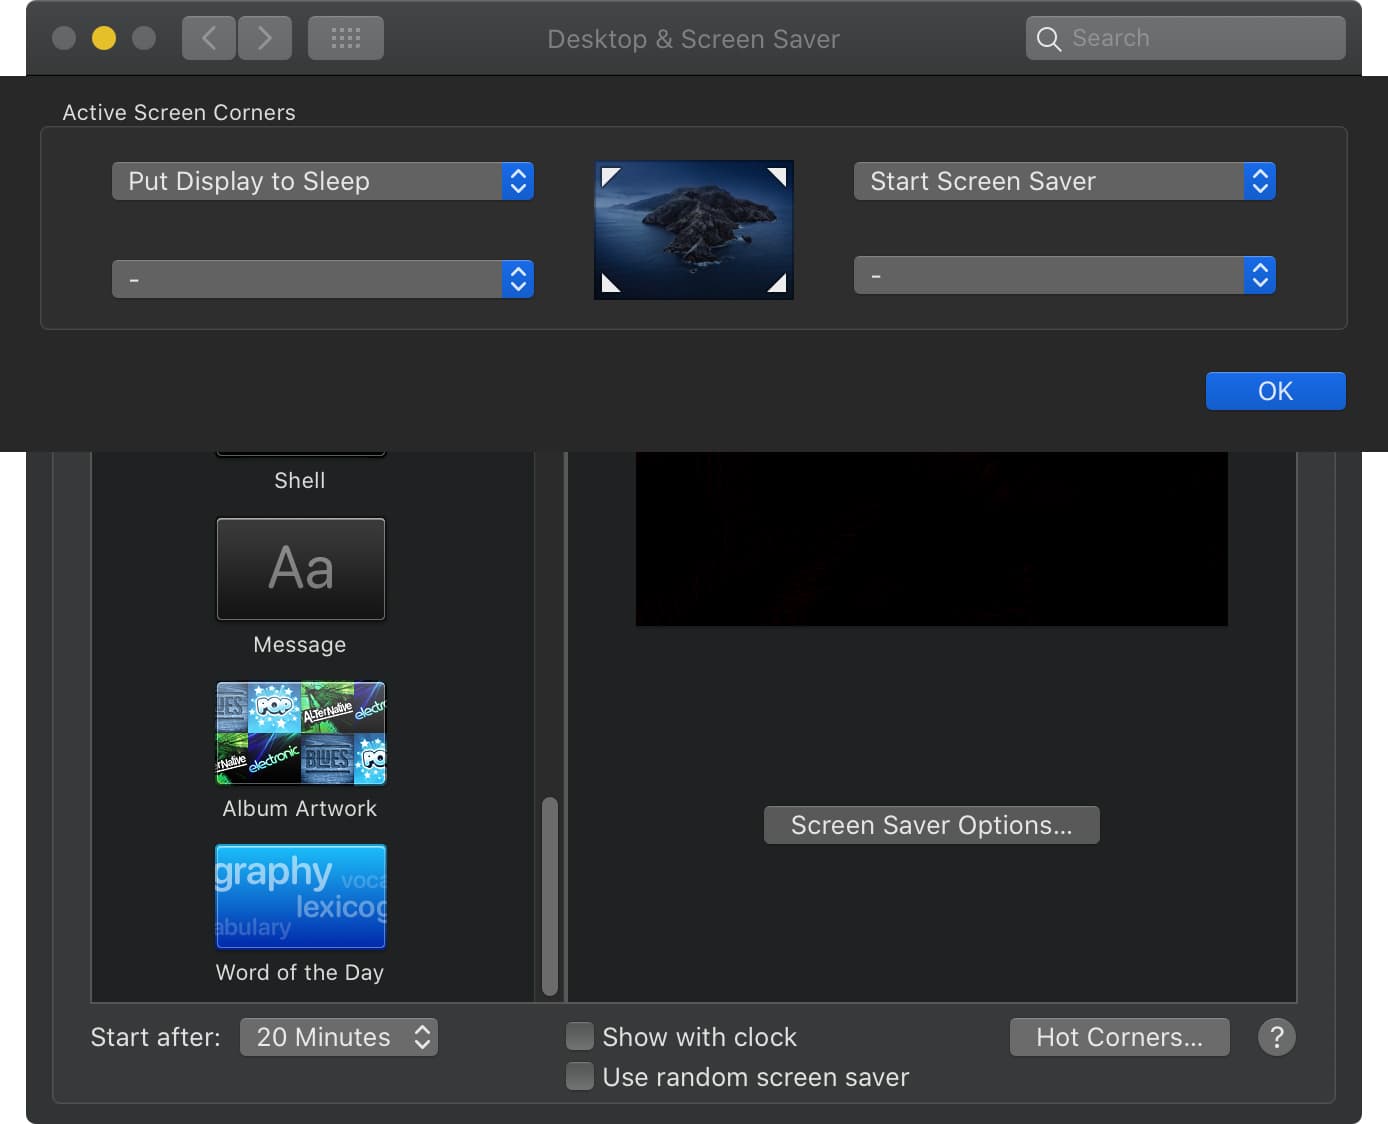 macOS desktop & screen saver options - hot corners